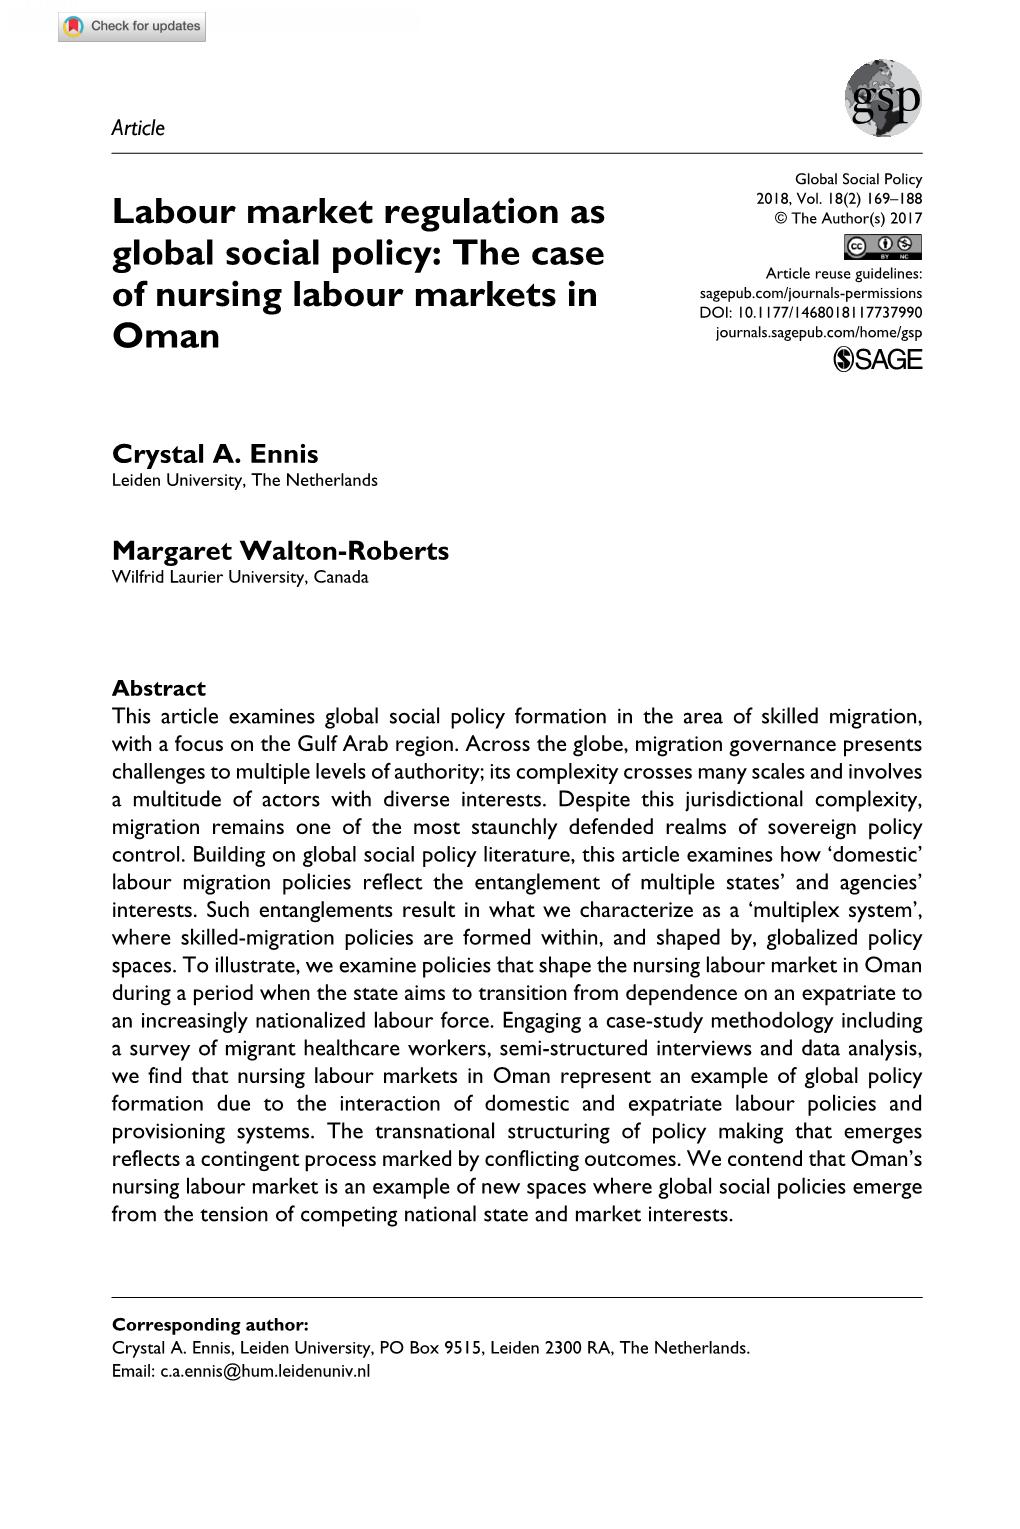 The Case of Nursing Labour Markets in Oman